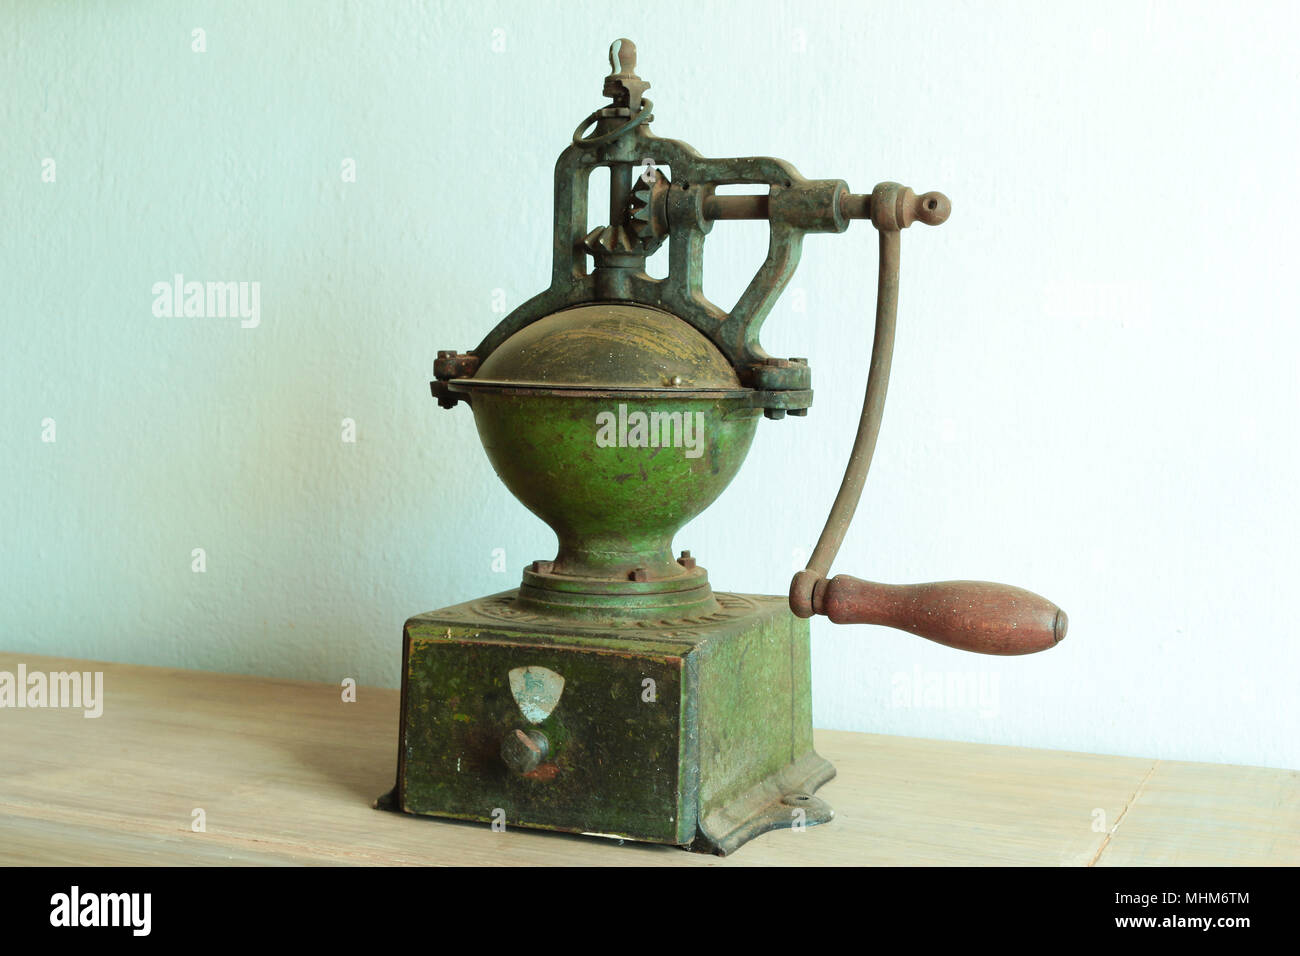 Alte Kaffeemühle aus Eisen Stockfotografie - Alamy